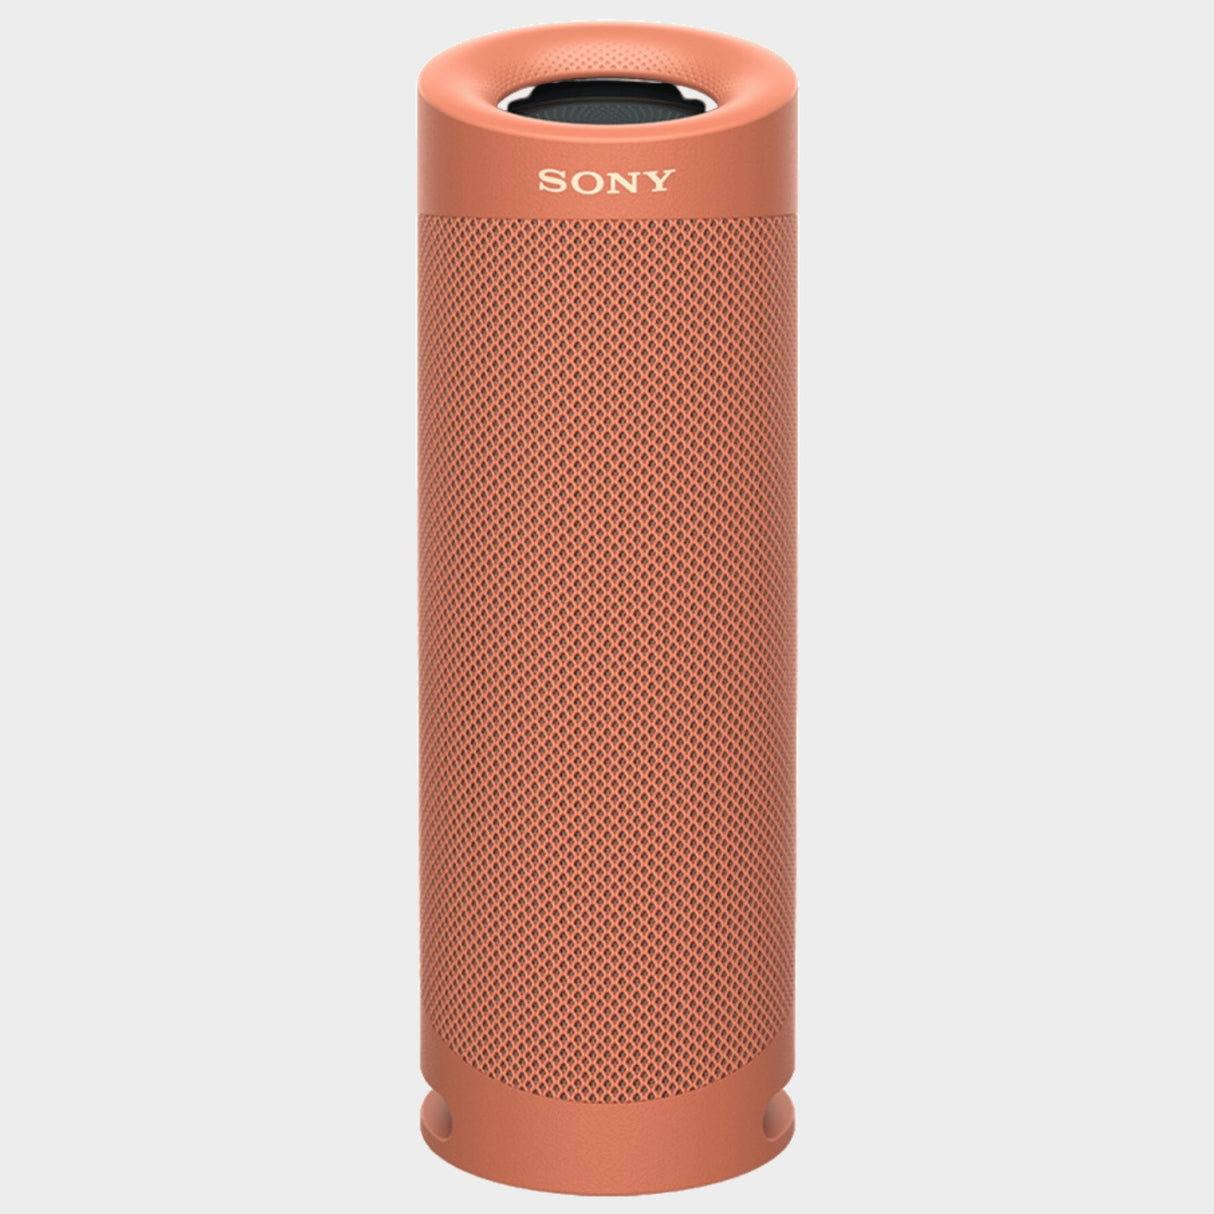 Sony Extra Bass Portable Wireless Speaker SRSXB23 - Red - KWT Tech Mart